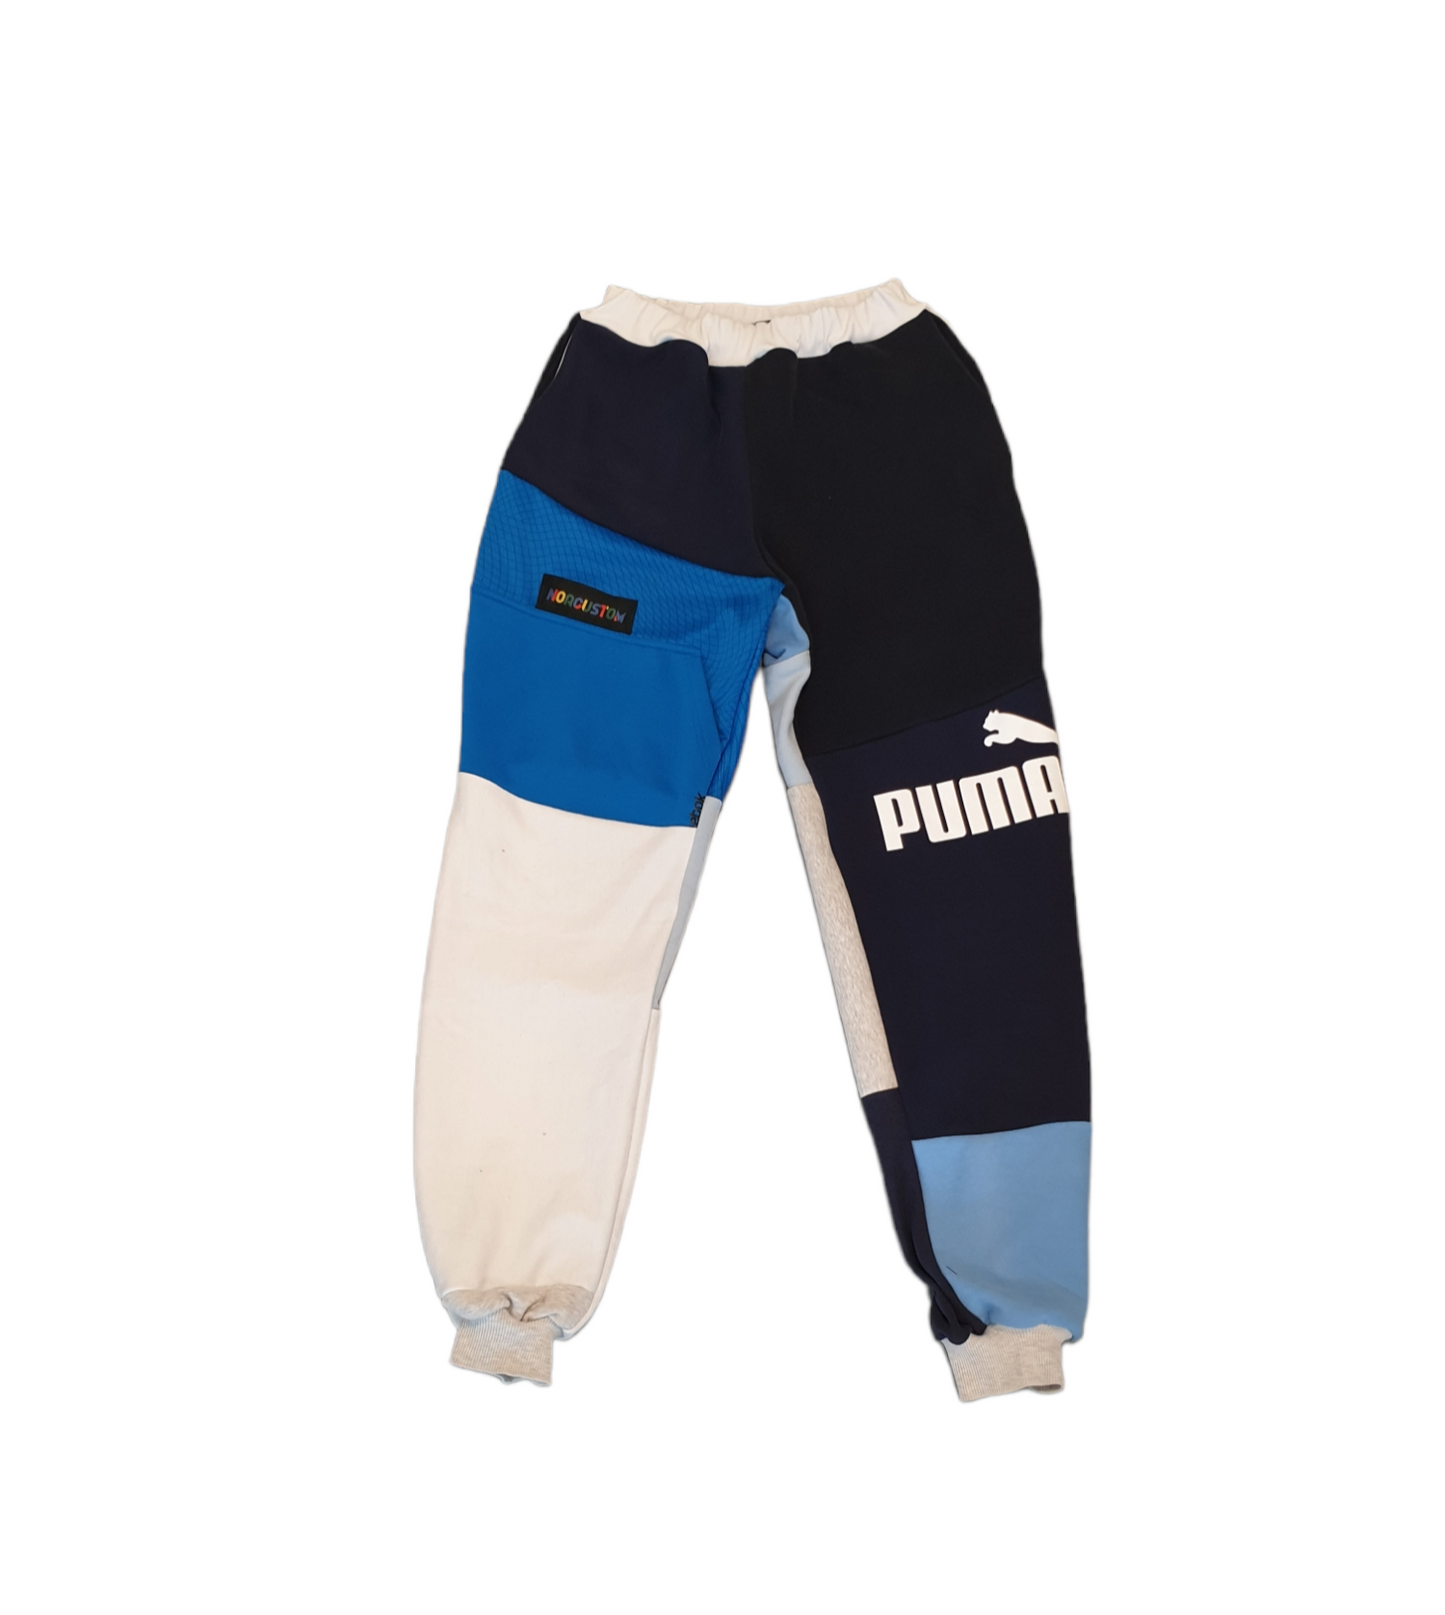 Unisex puma jogging pants